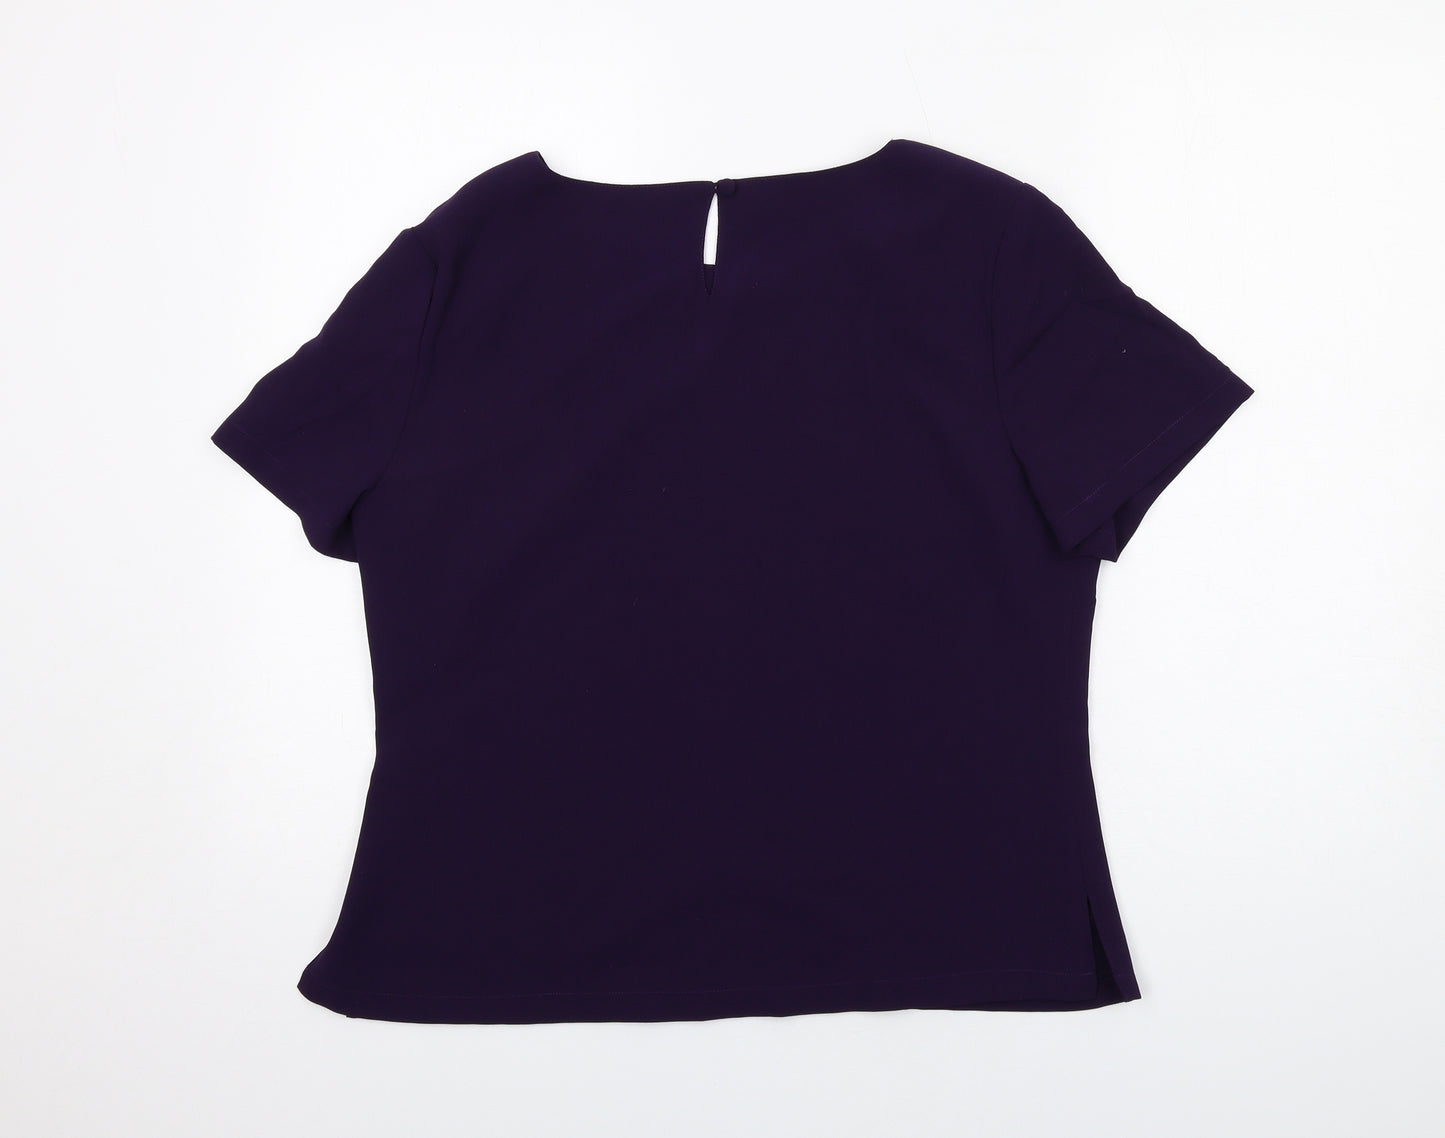 Jacques Vert Womens Purple Polyester Basic Blouse Size 12 Boat Neck